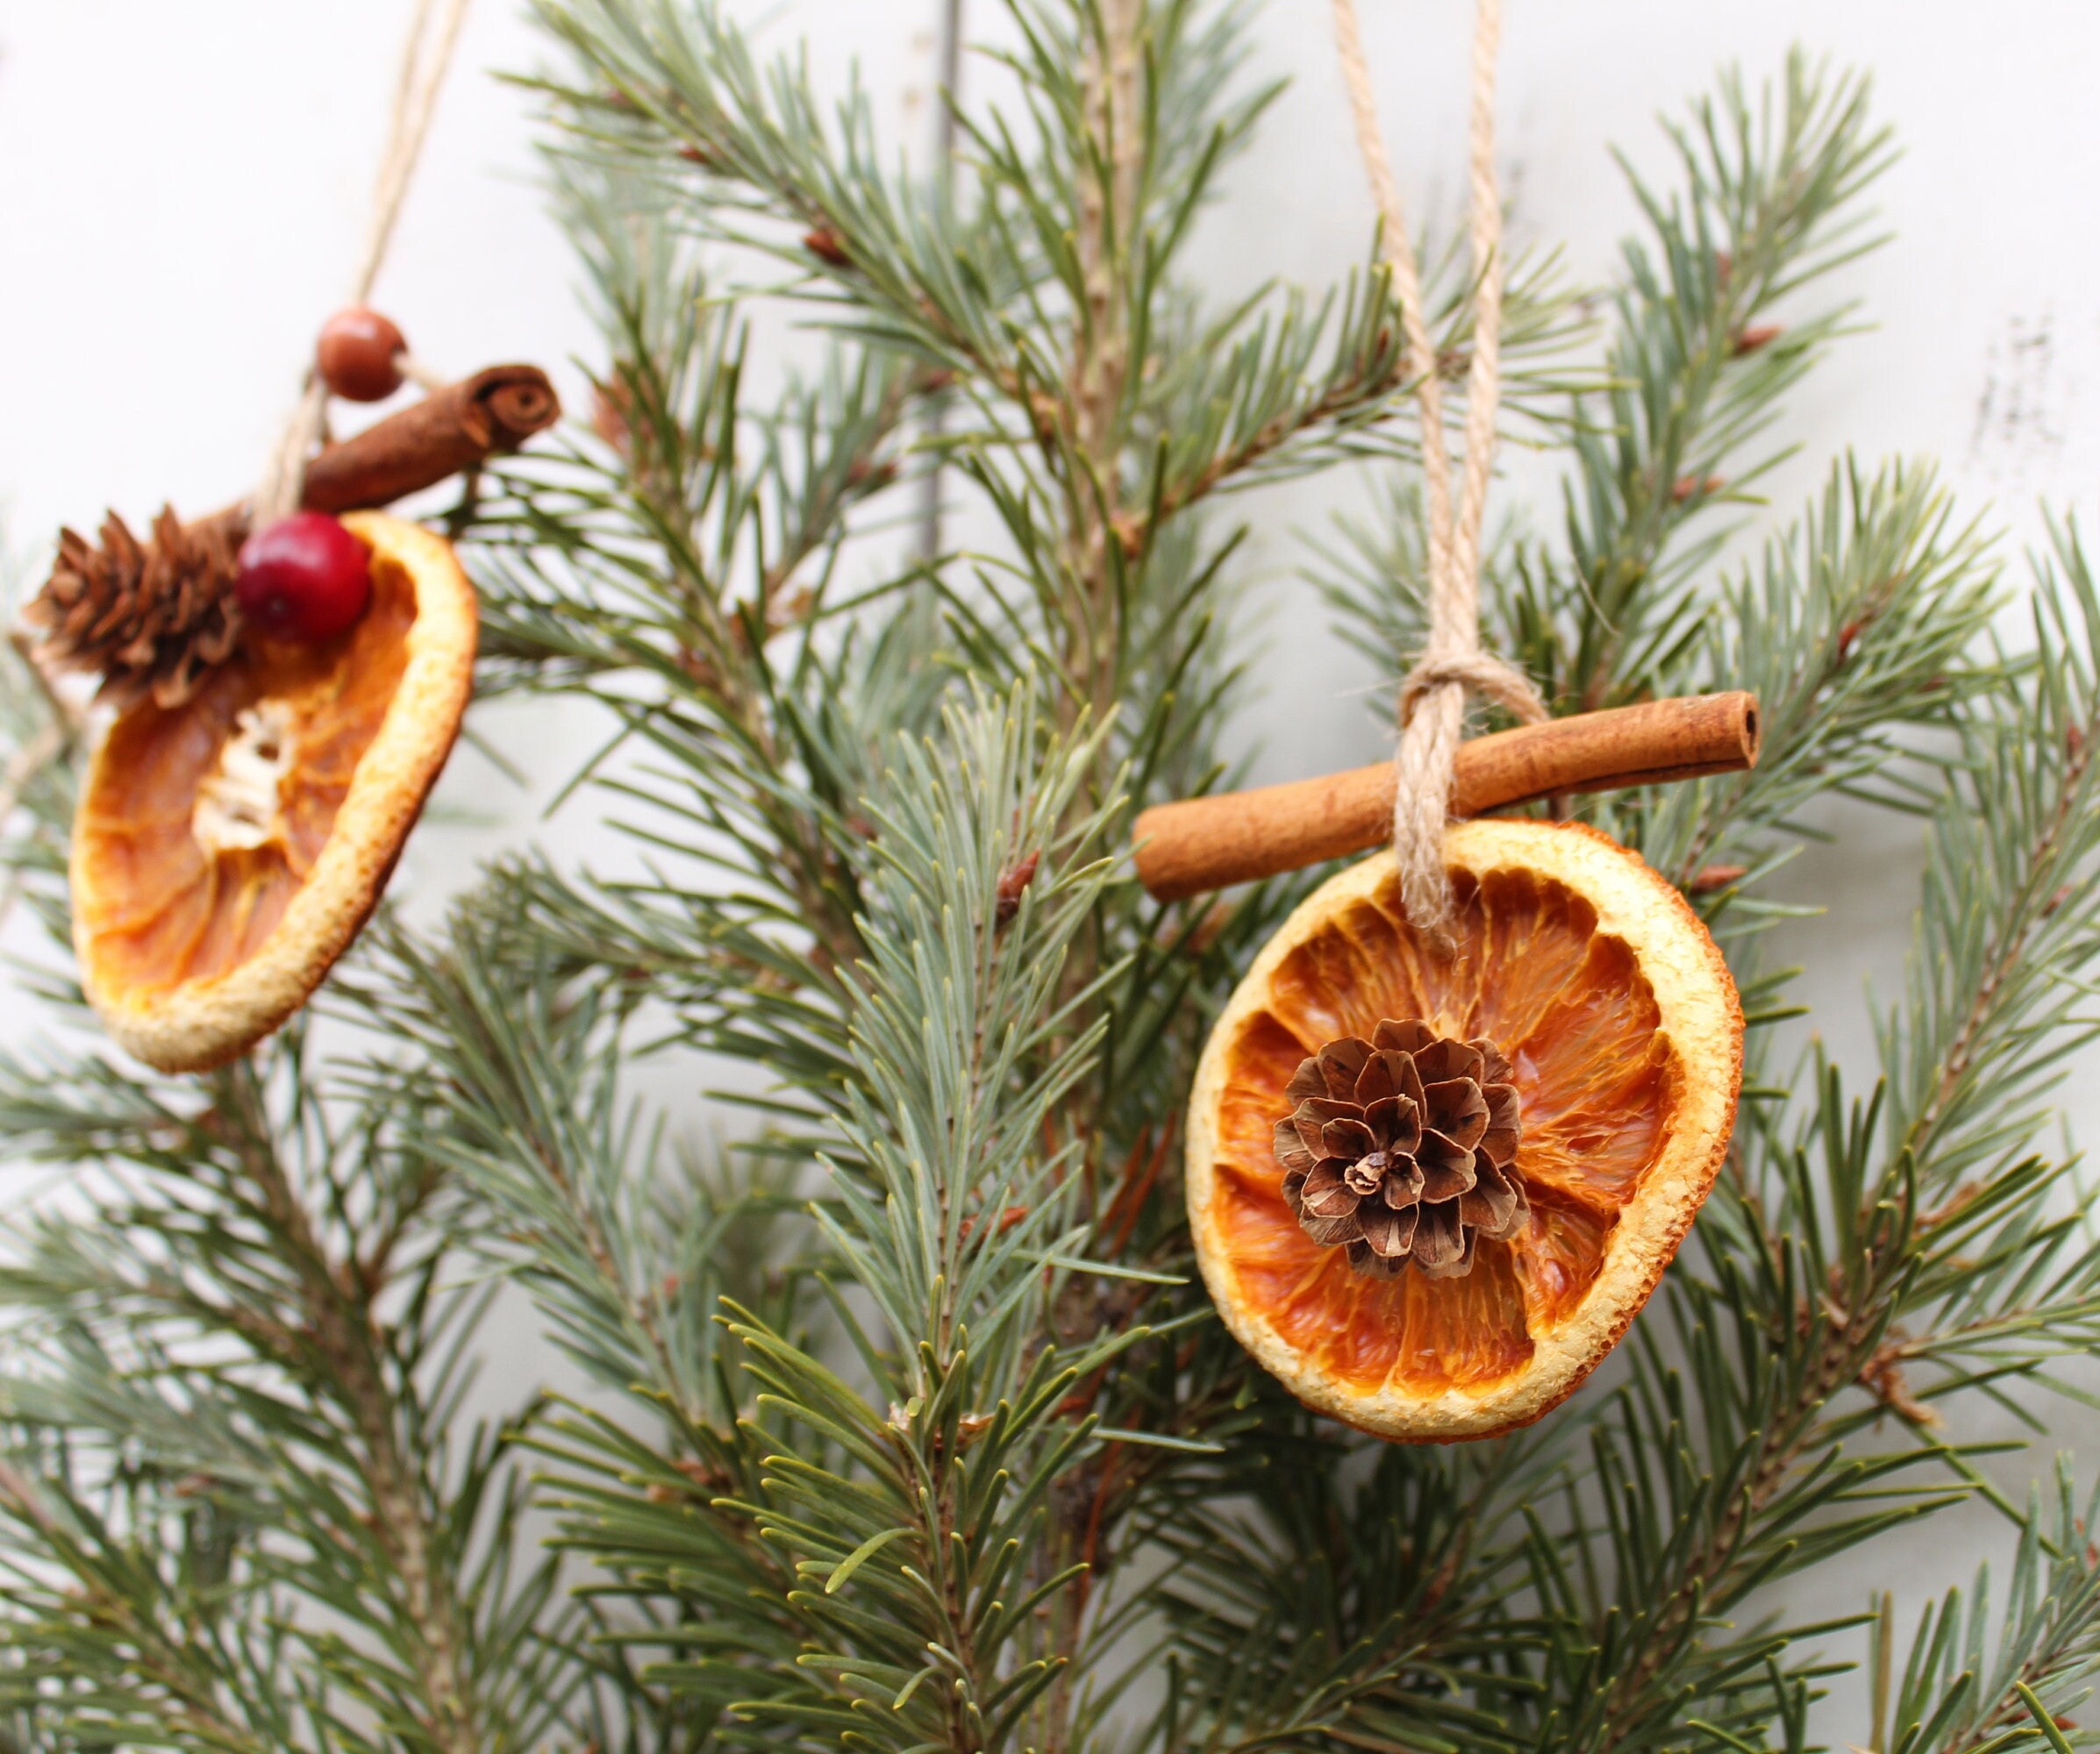 Christmas Decor with Pine Branches, Cones, Orange, Cinnamon Sticks